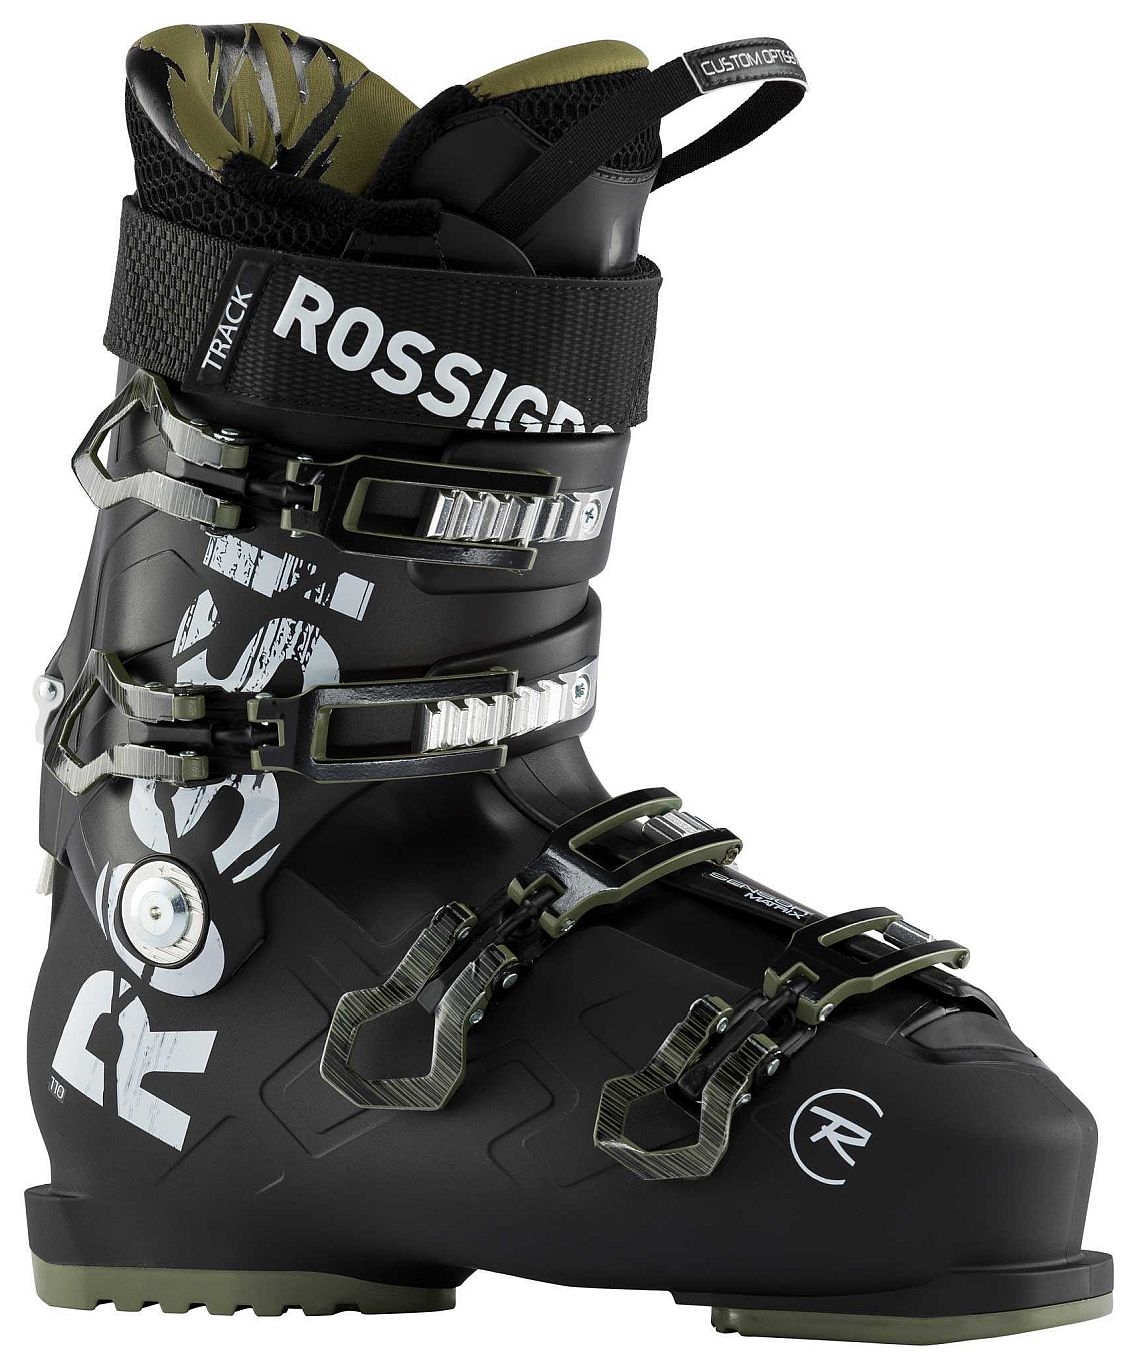 Rossignol buty narciarskie Track 110